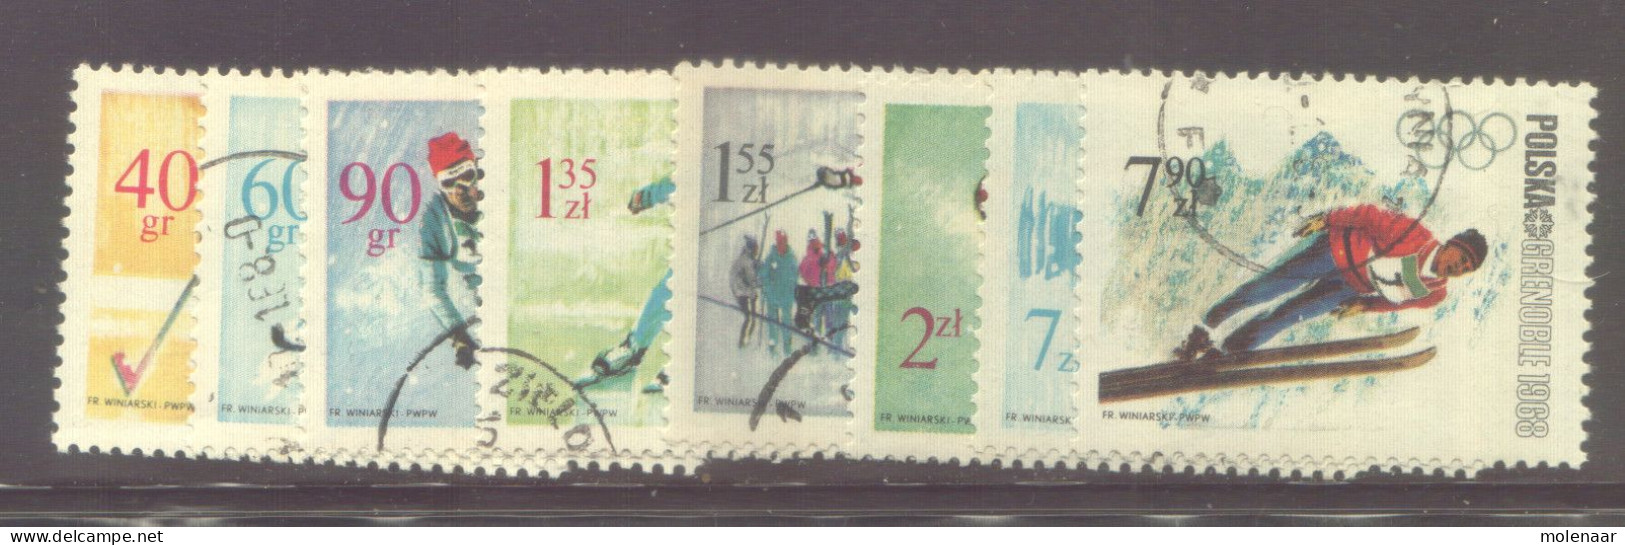 Postzegels > Europa > Polen > 1944-.... Republiek > 1961-70 > Gebruikt No. 1815-1822 (12007) - Gebraucht